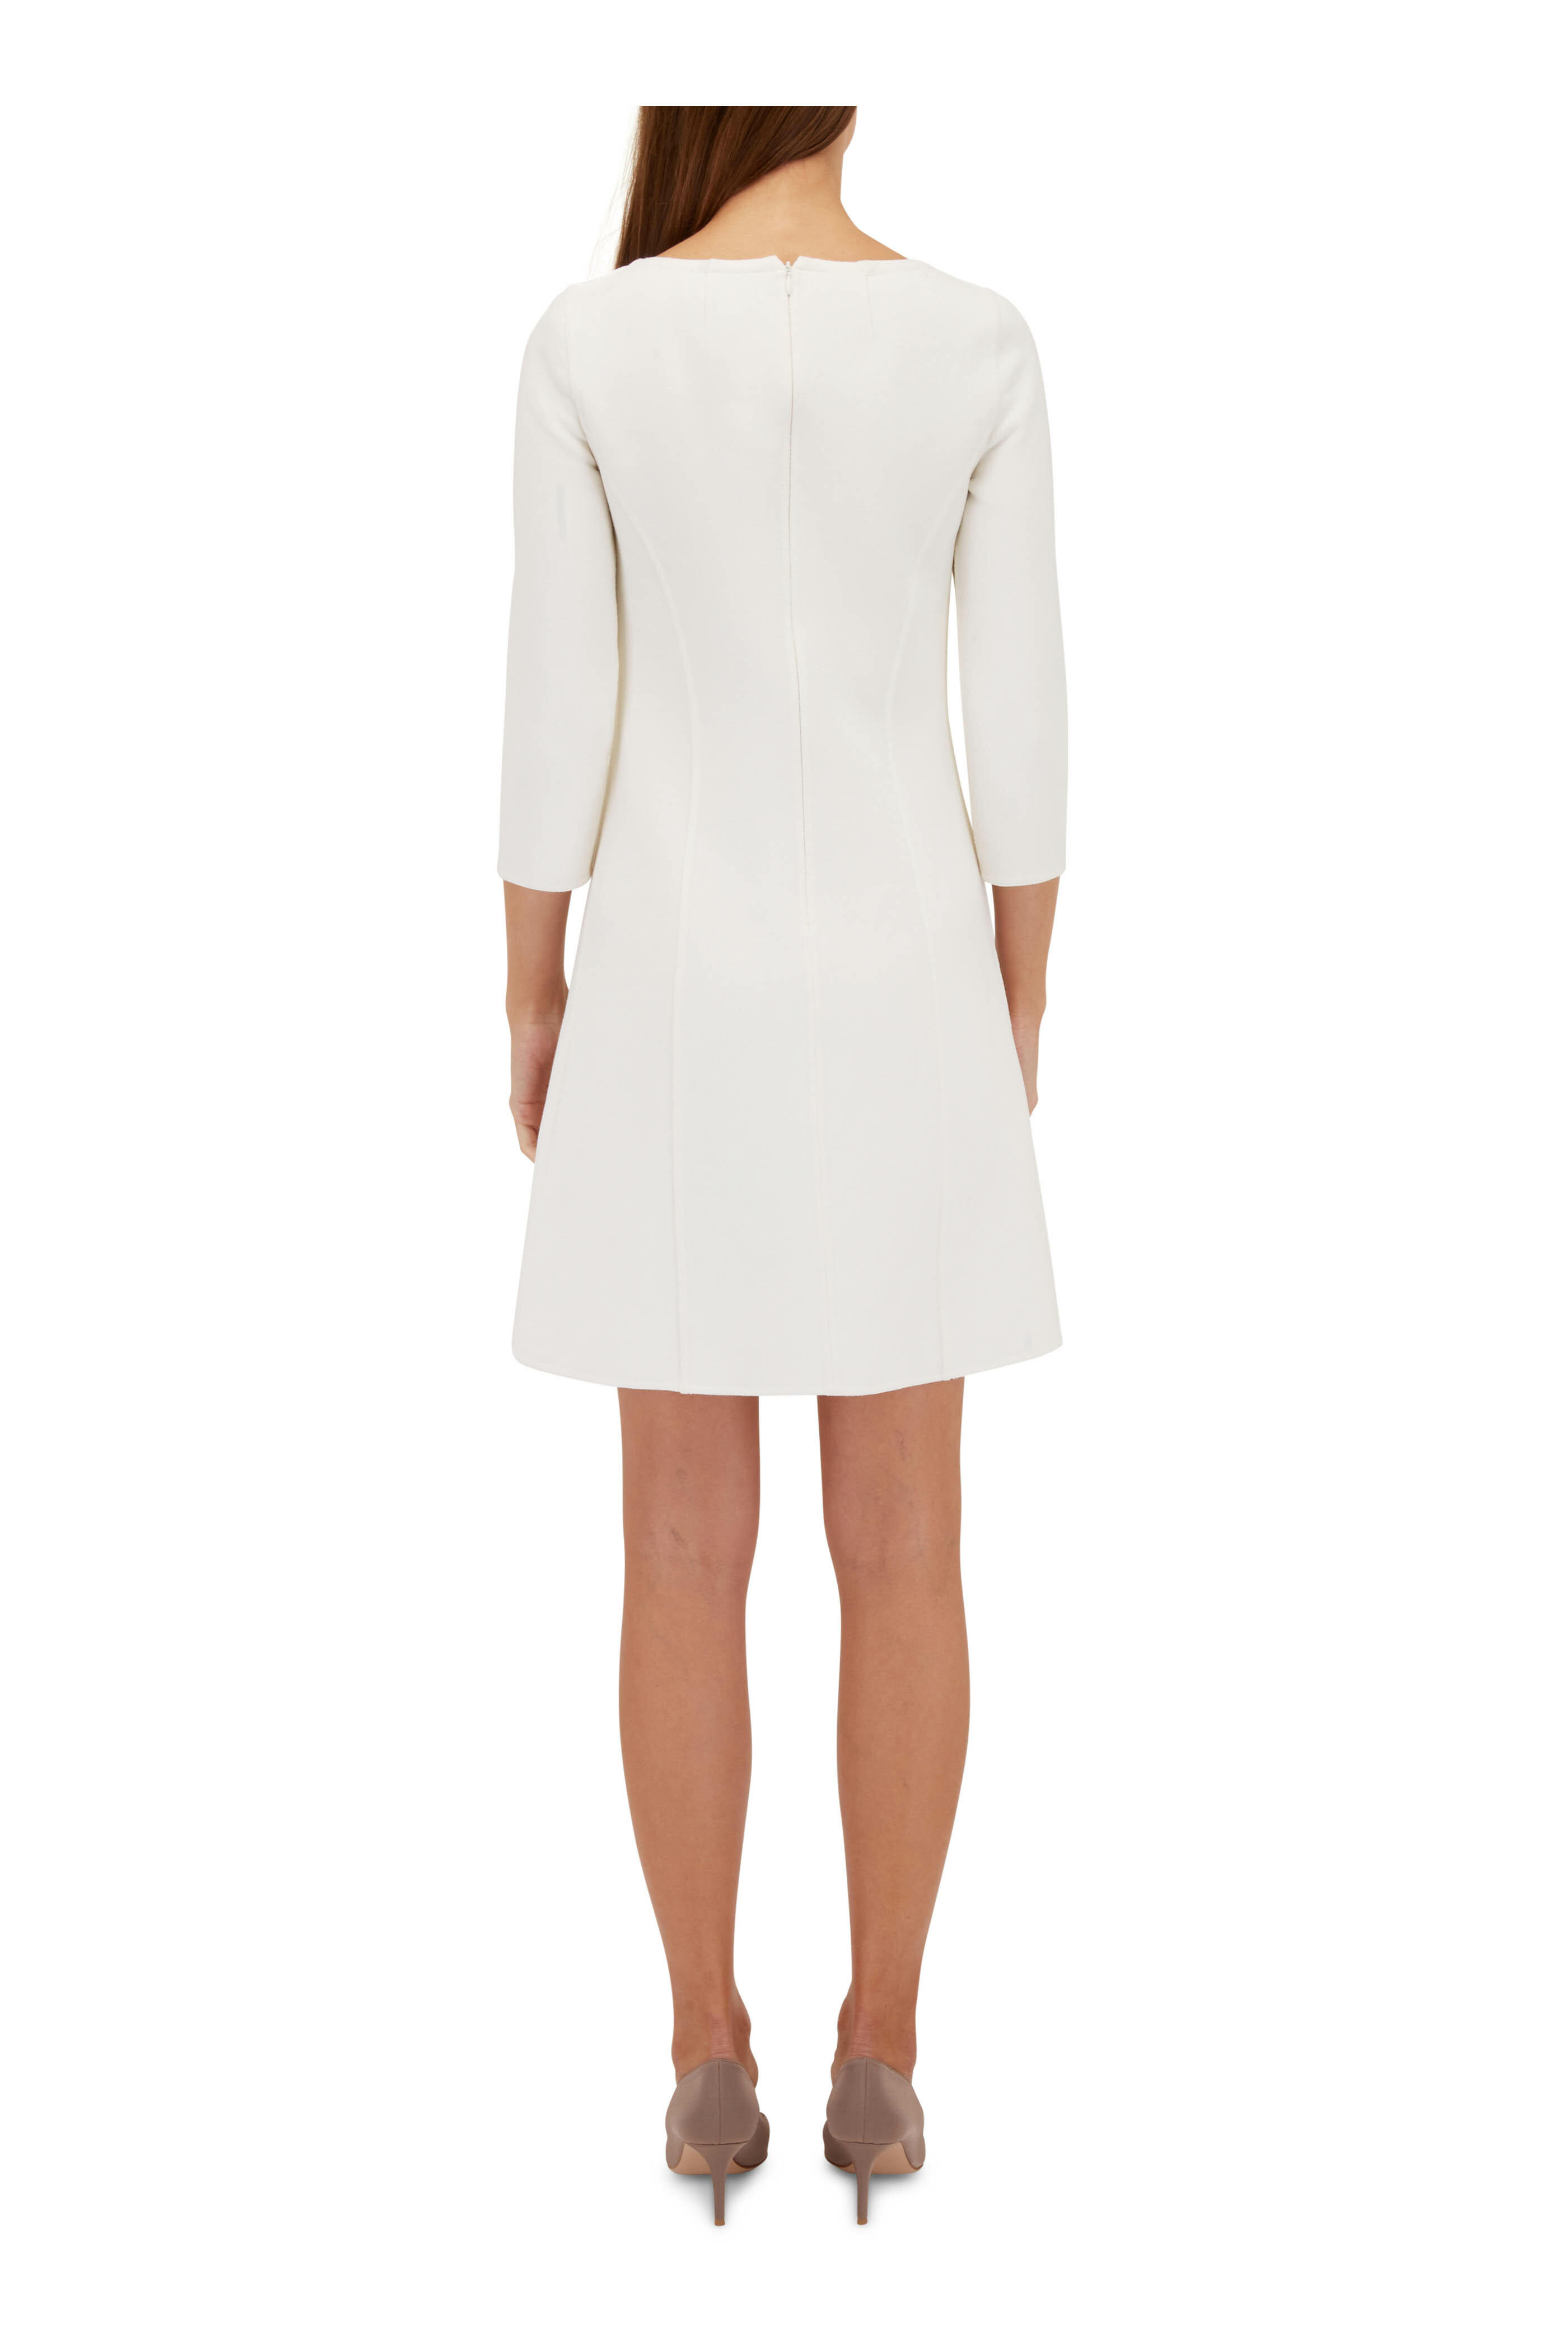 Michael Kors Collection - Wool Three-Quarter Shift White Dress Sleeve